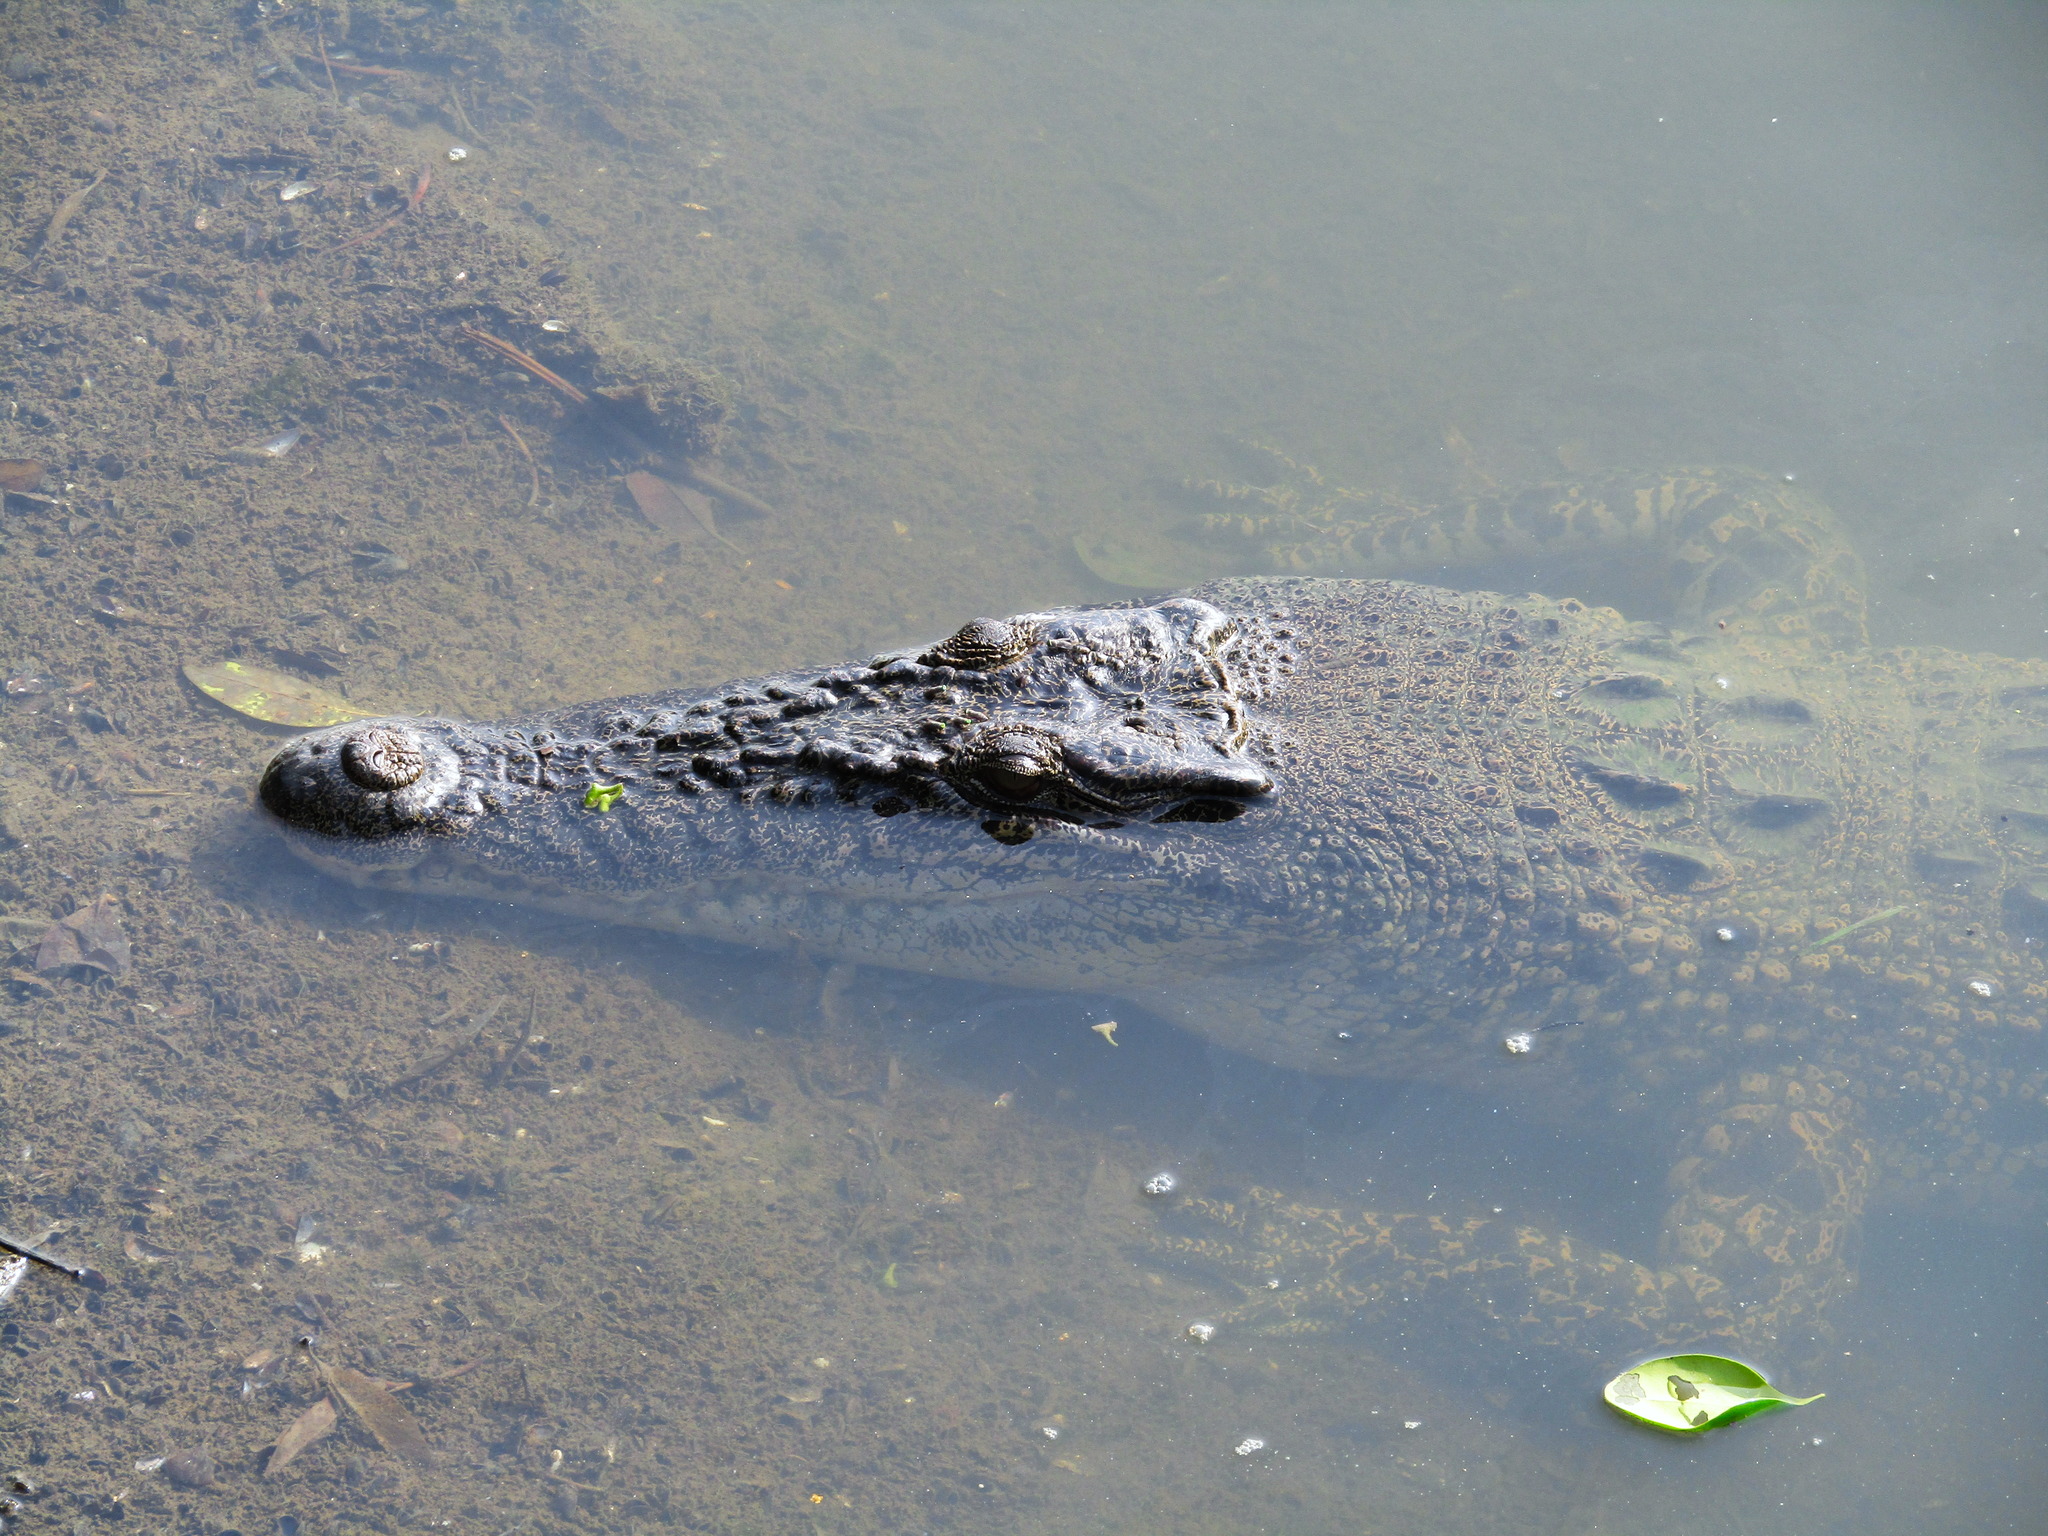 crocodiles are predators good at watch and wait